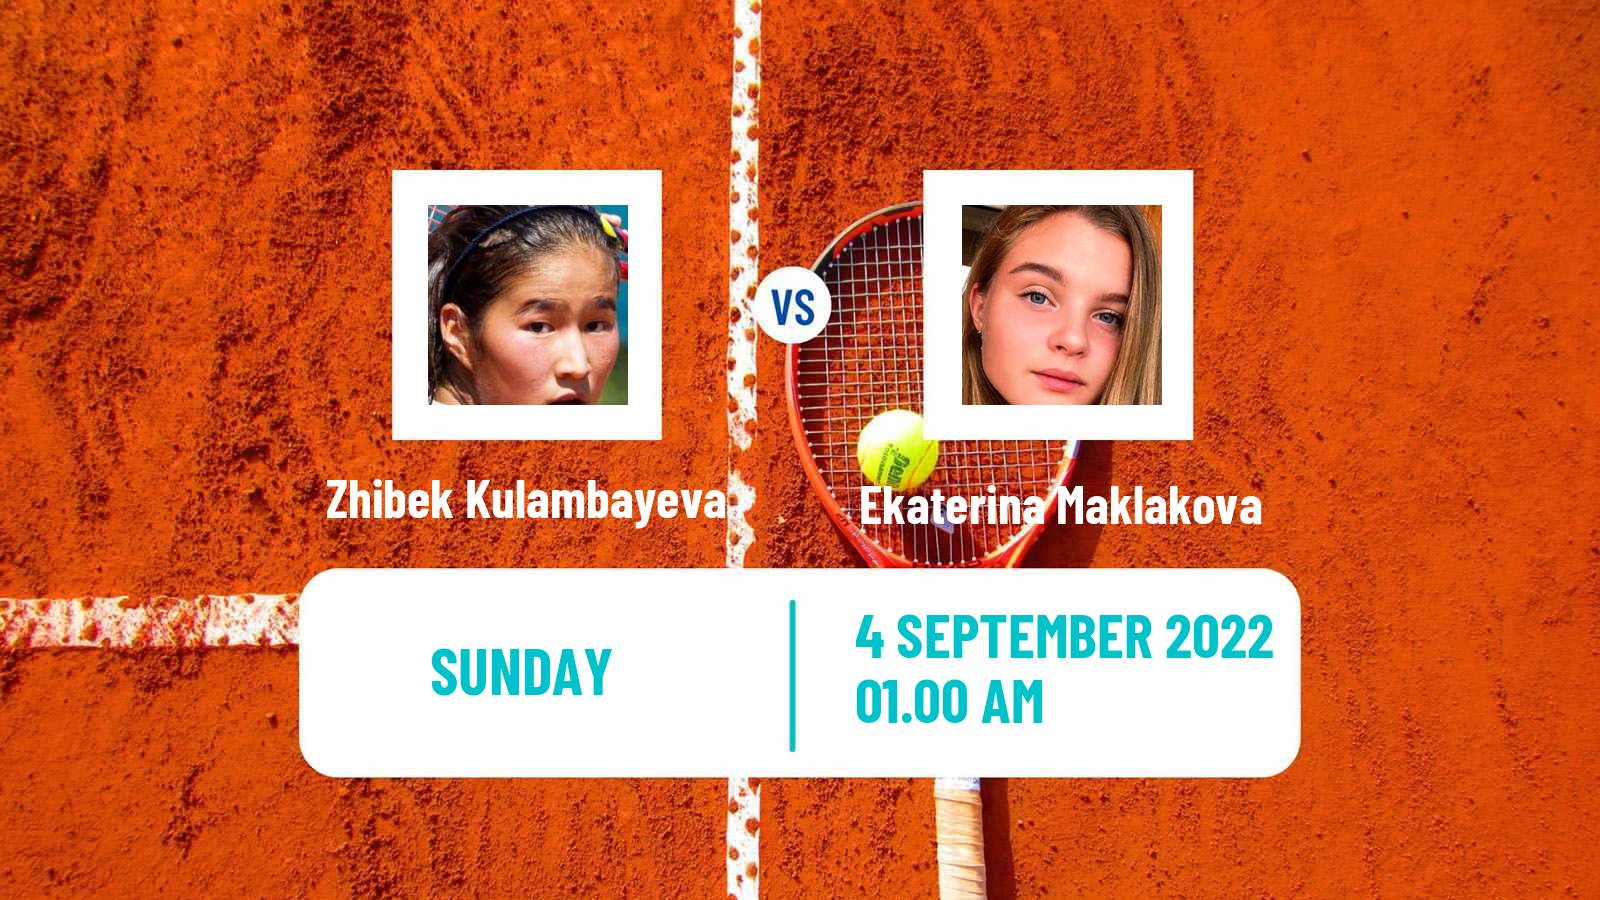 Tennis ITF Tournaments Zhibek Kulambayeva - Ekaterina Maklakova